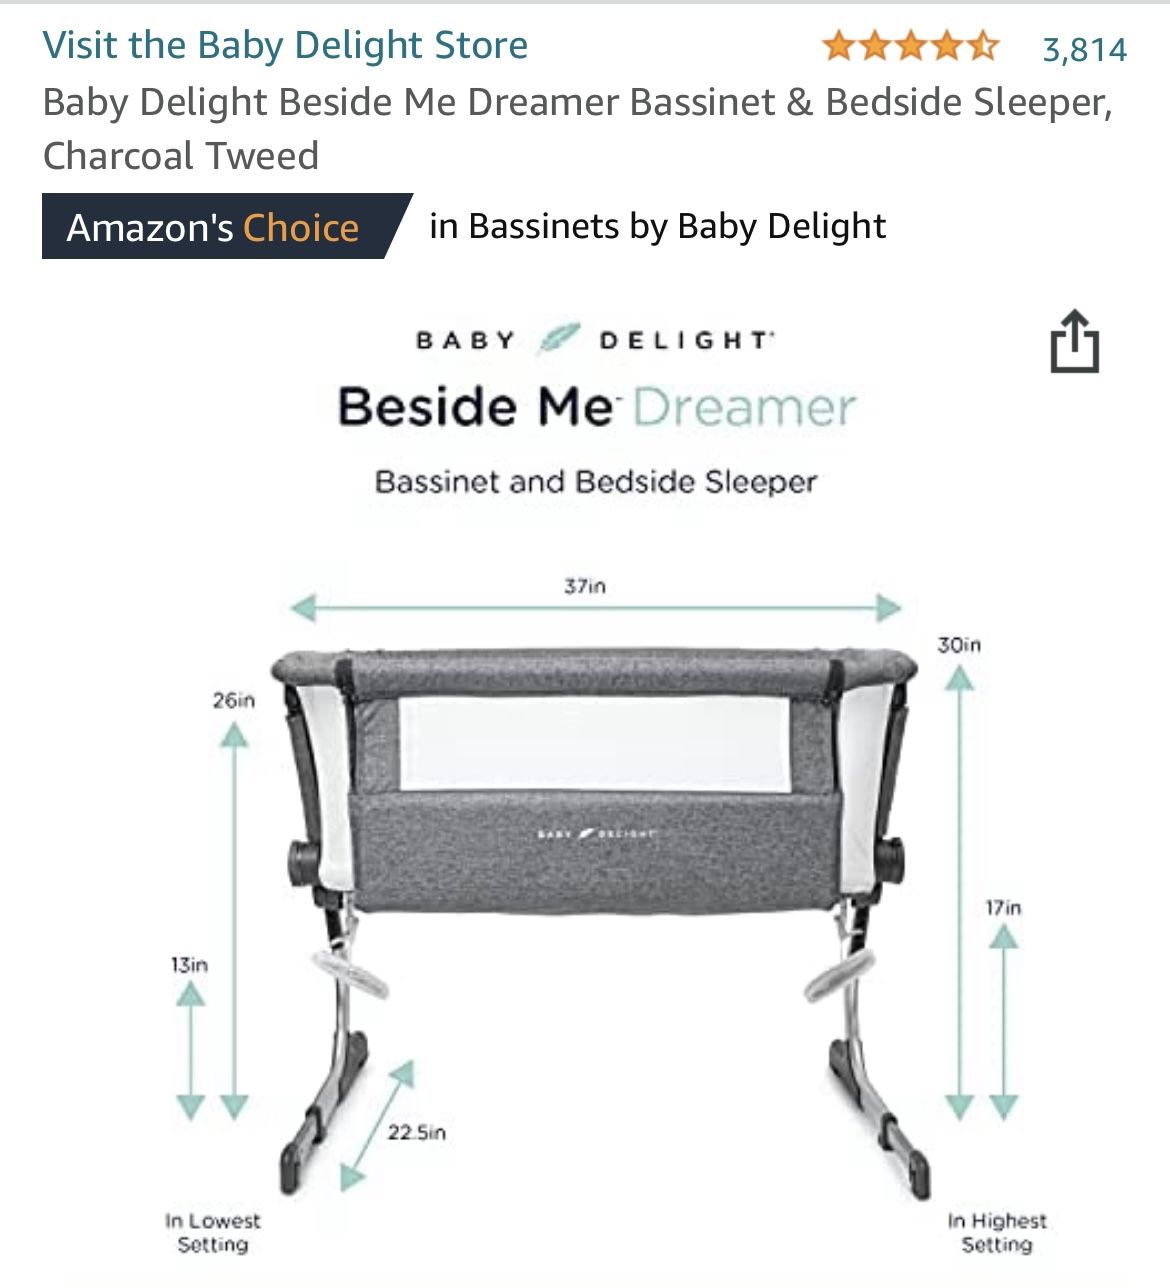 Baby Delight Beside Me Dreamer Bassinet Bedside Sleeper